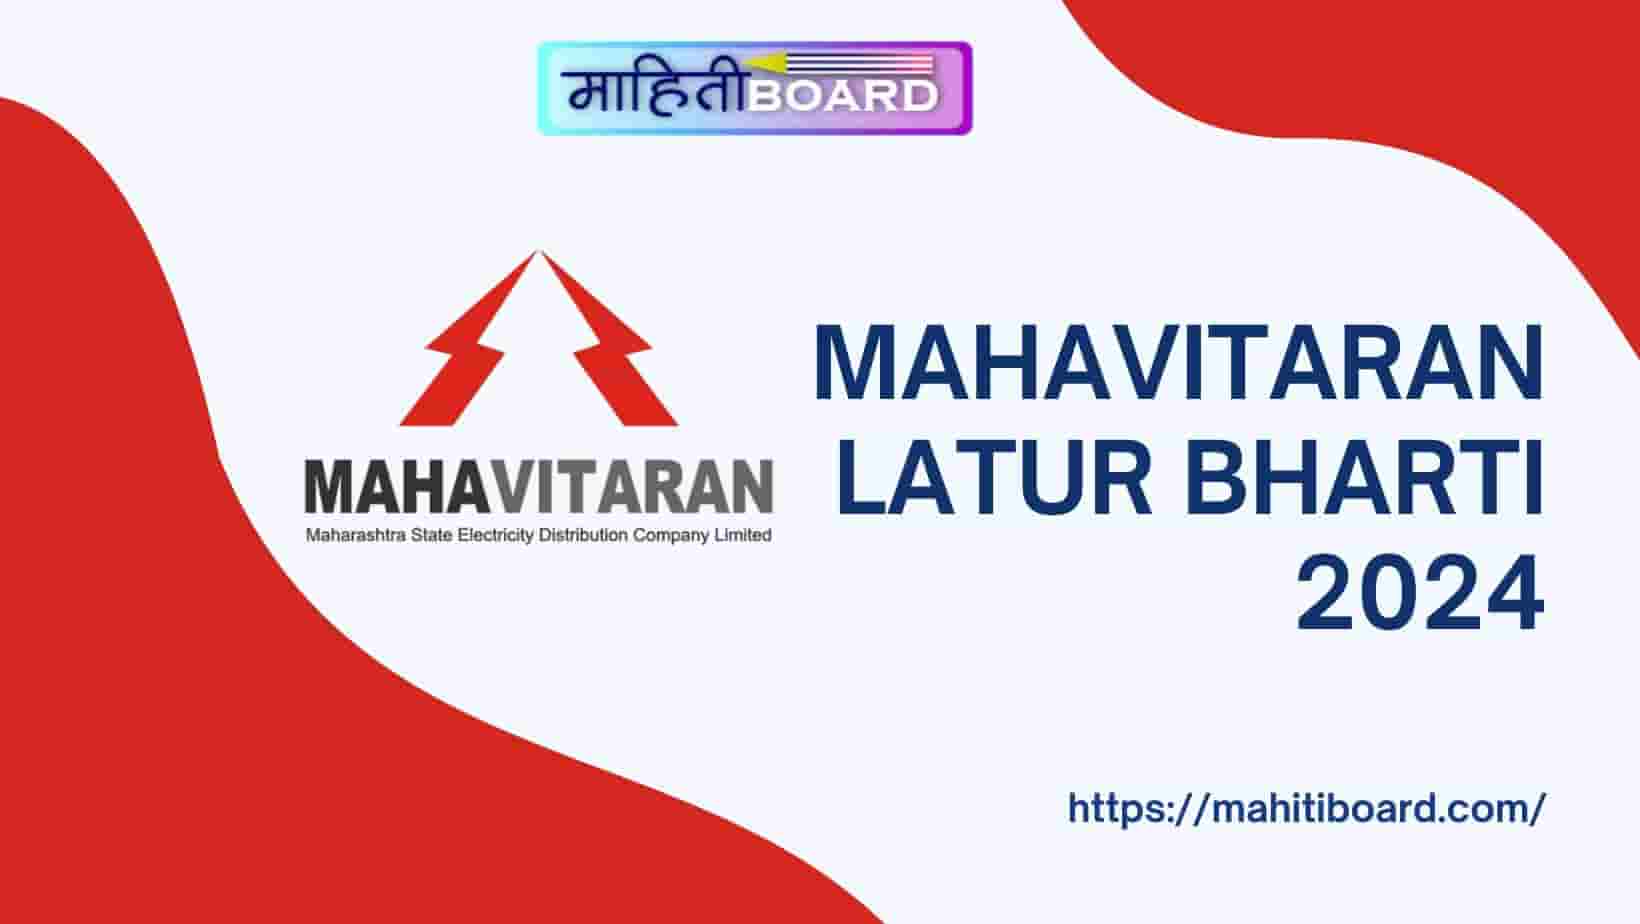 Mahavitaran Latur Bharti 2024